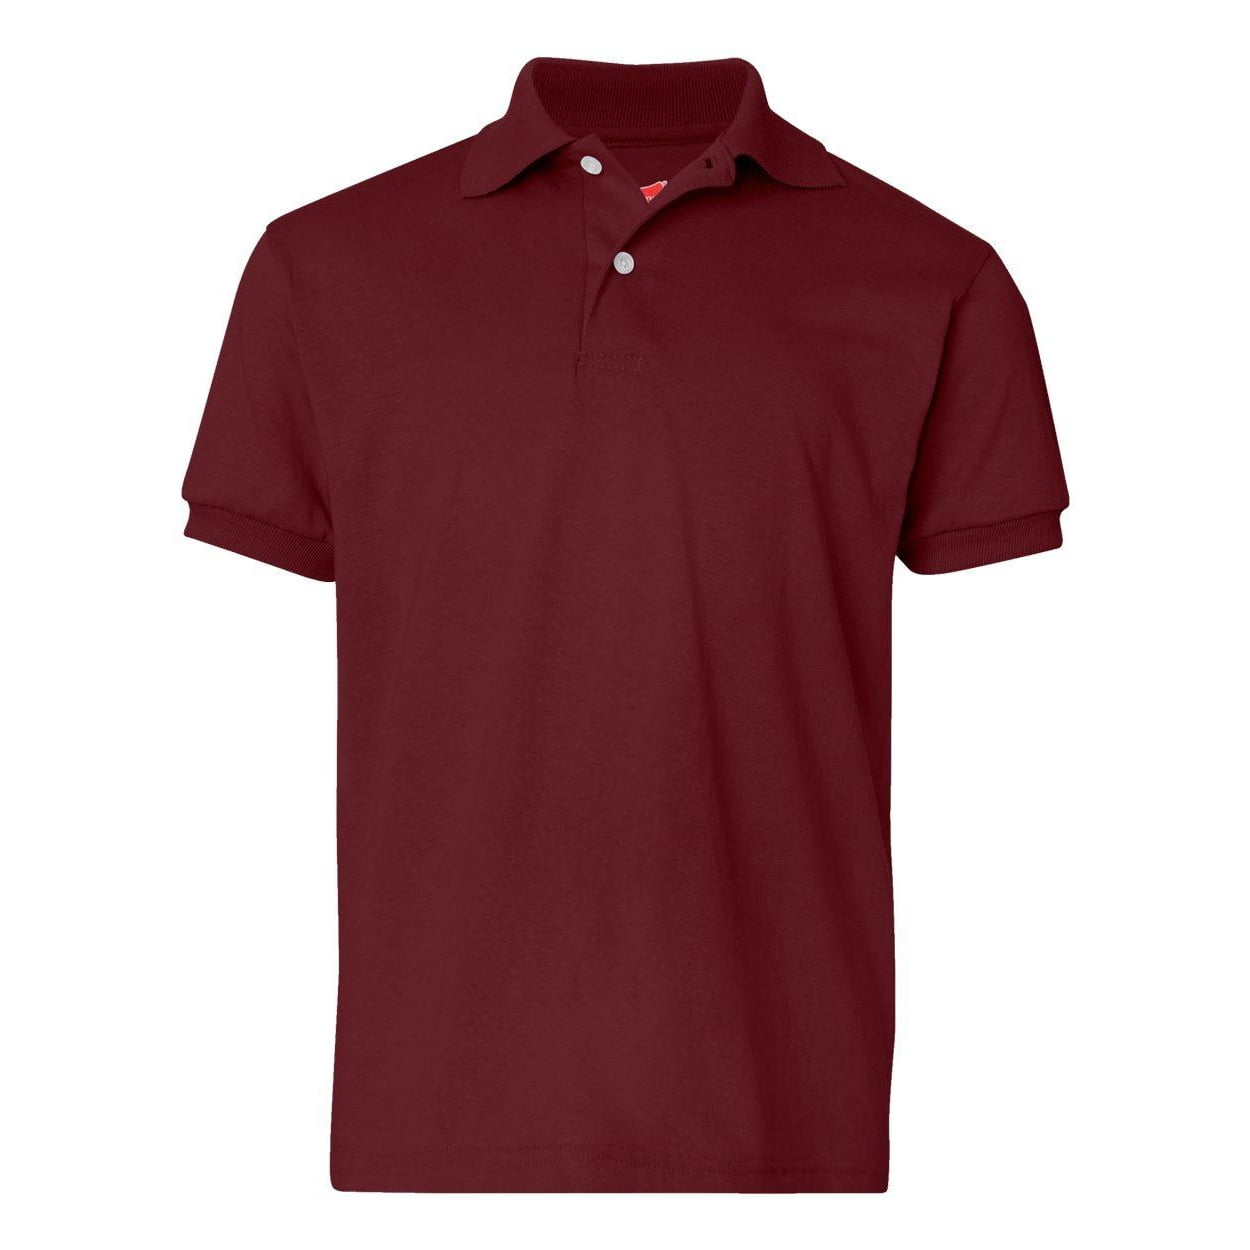 Hanes Boys School Uniform 4-18 EcoSmart Jersey Polo Shirt - Walmart.com